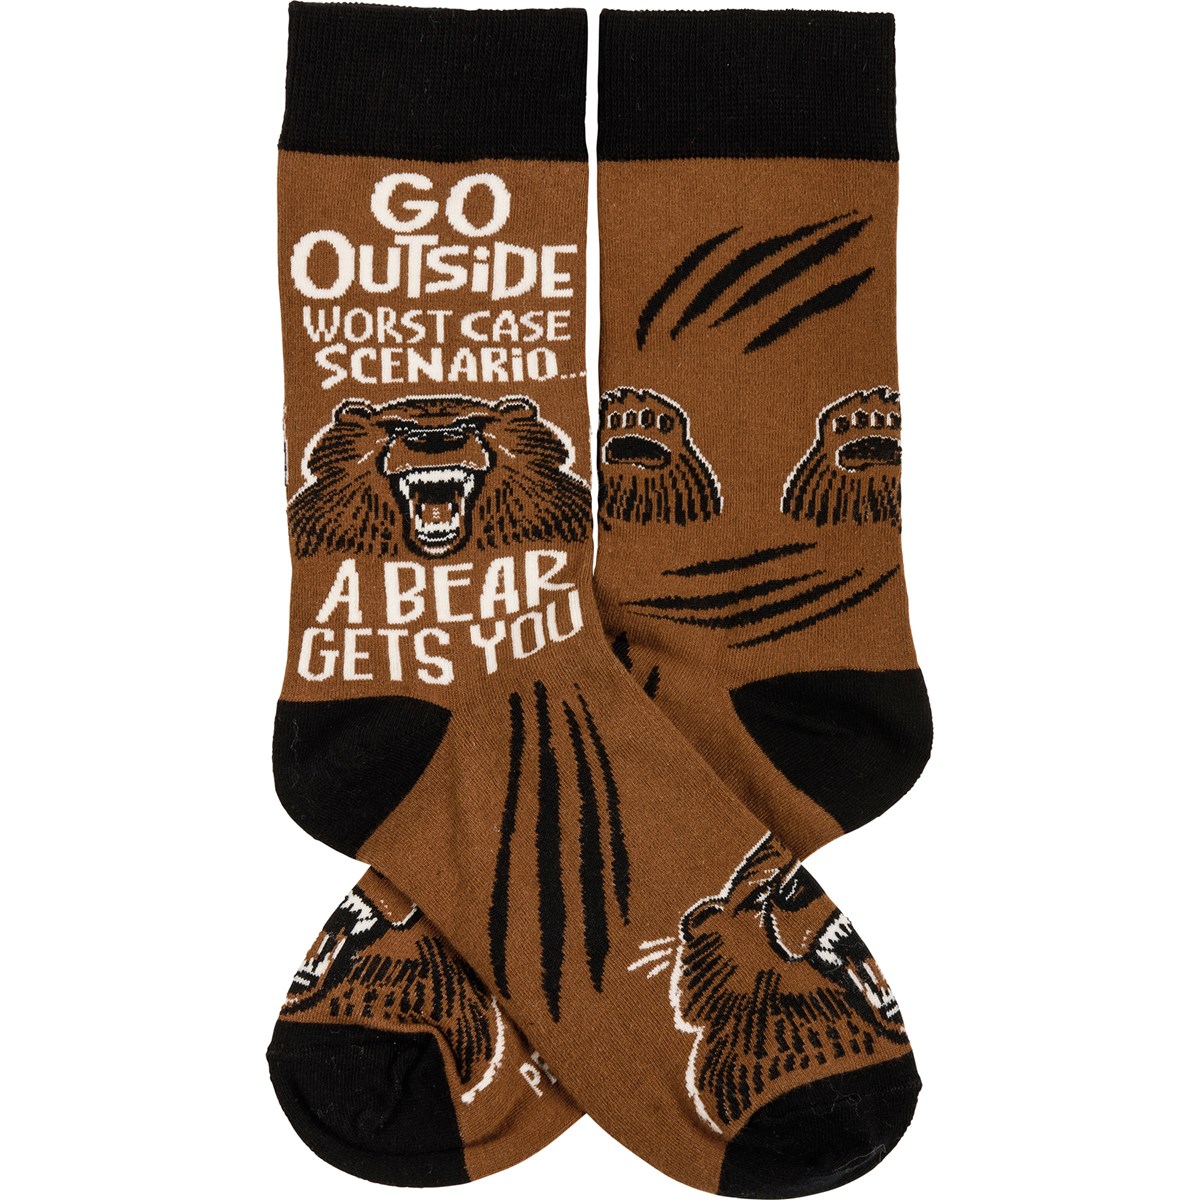 Go Outside Worst Case Scenario A Bear Socks - Cotton, Nylon, Spandex